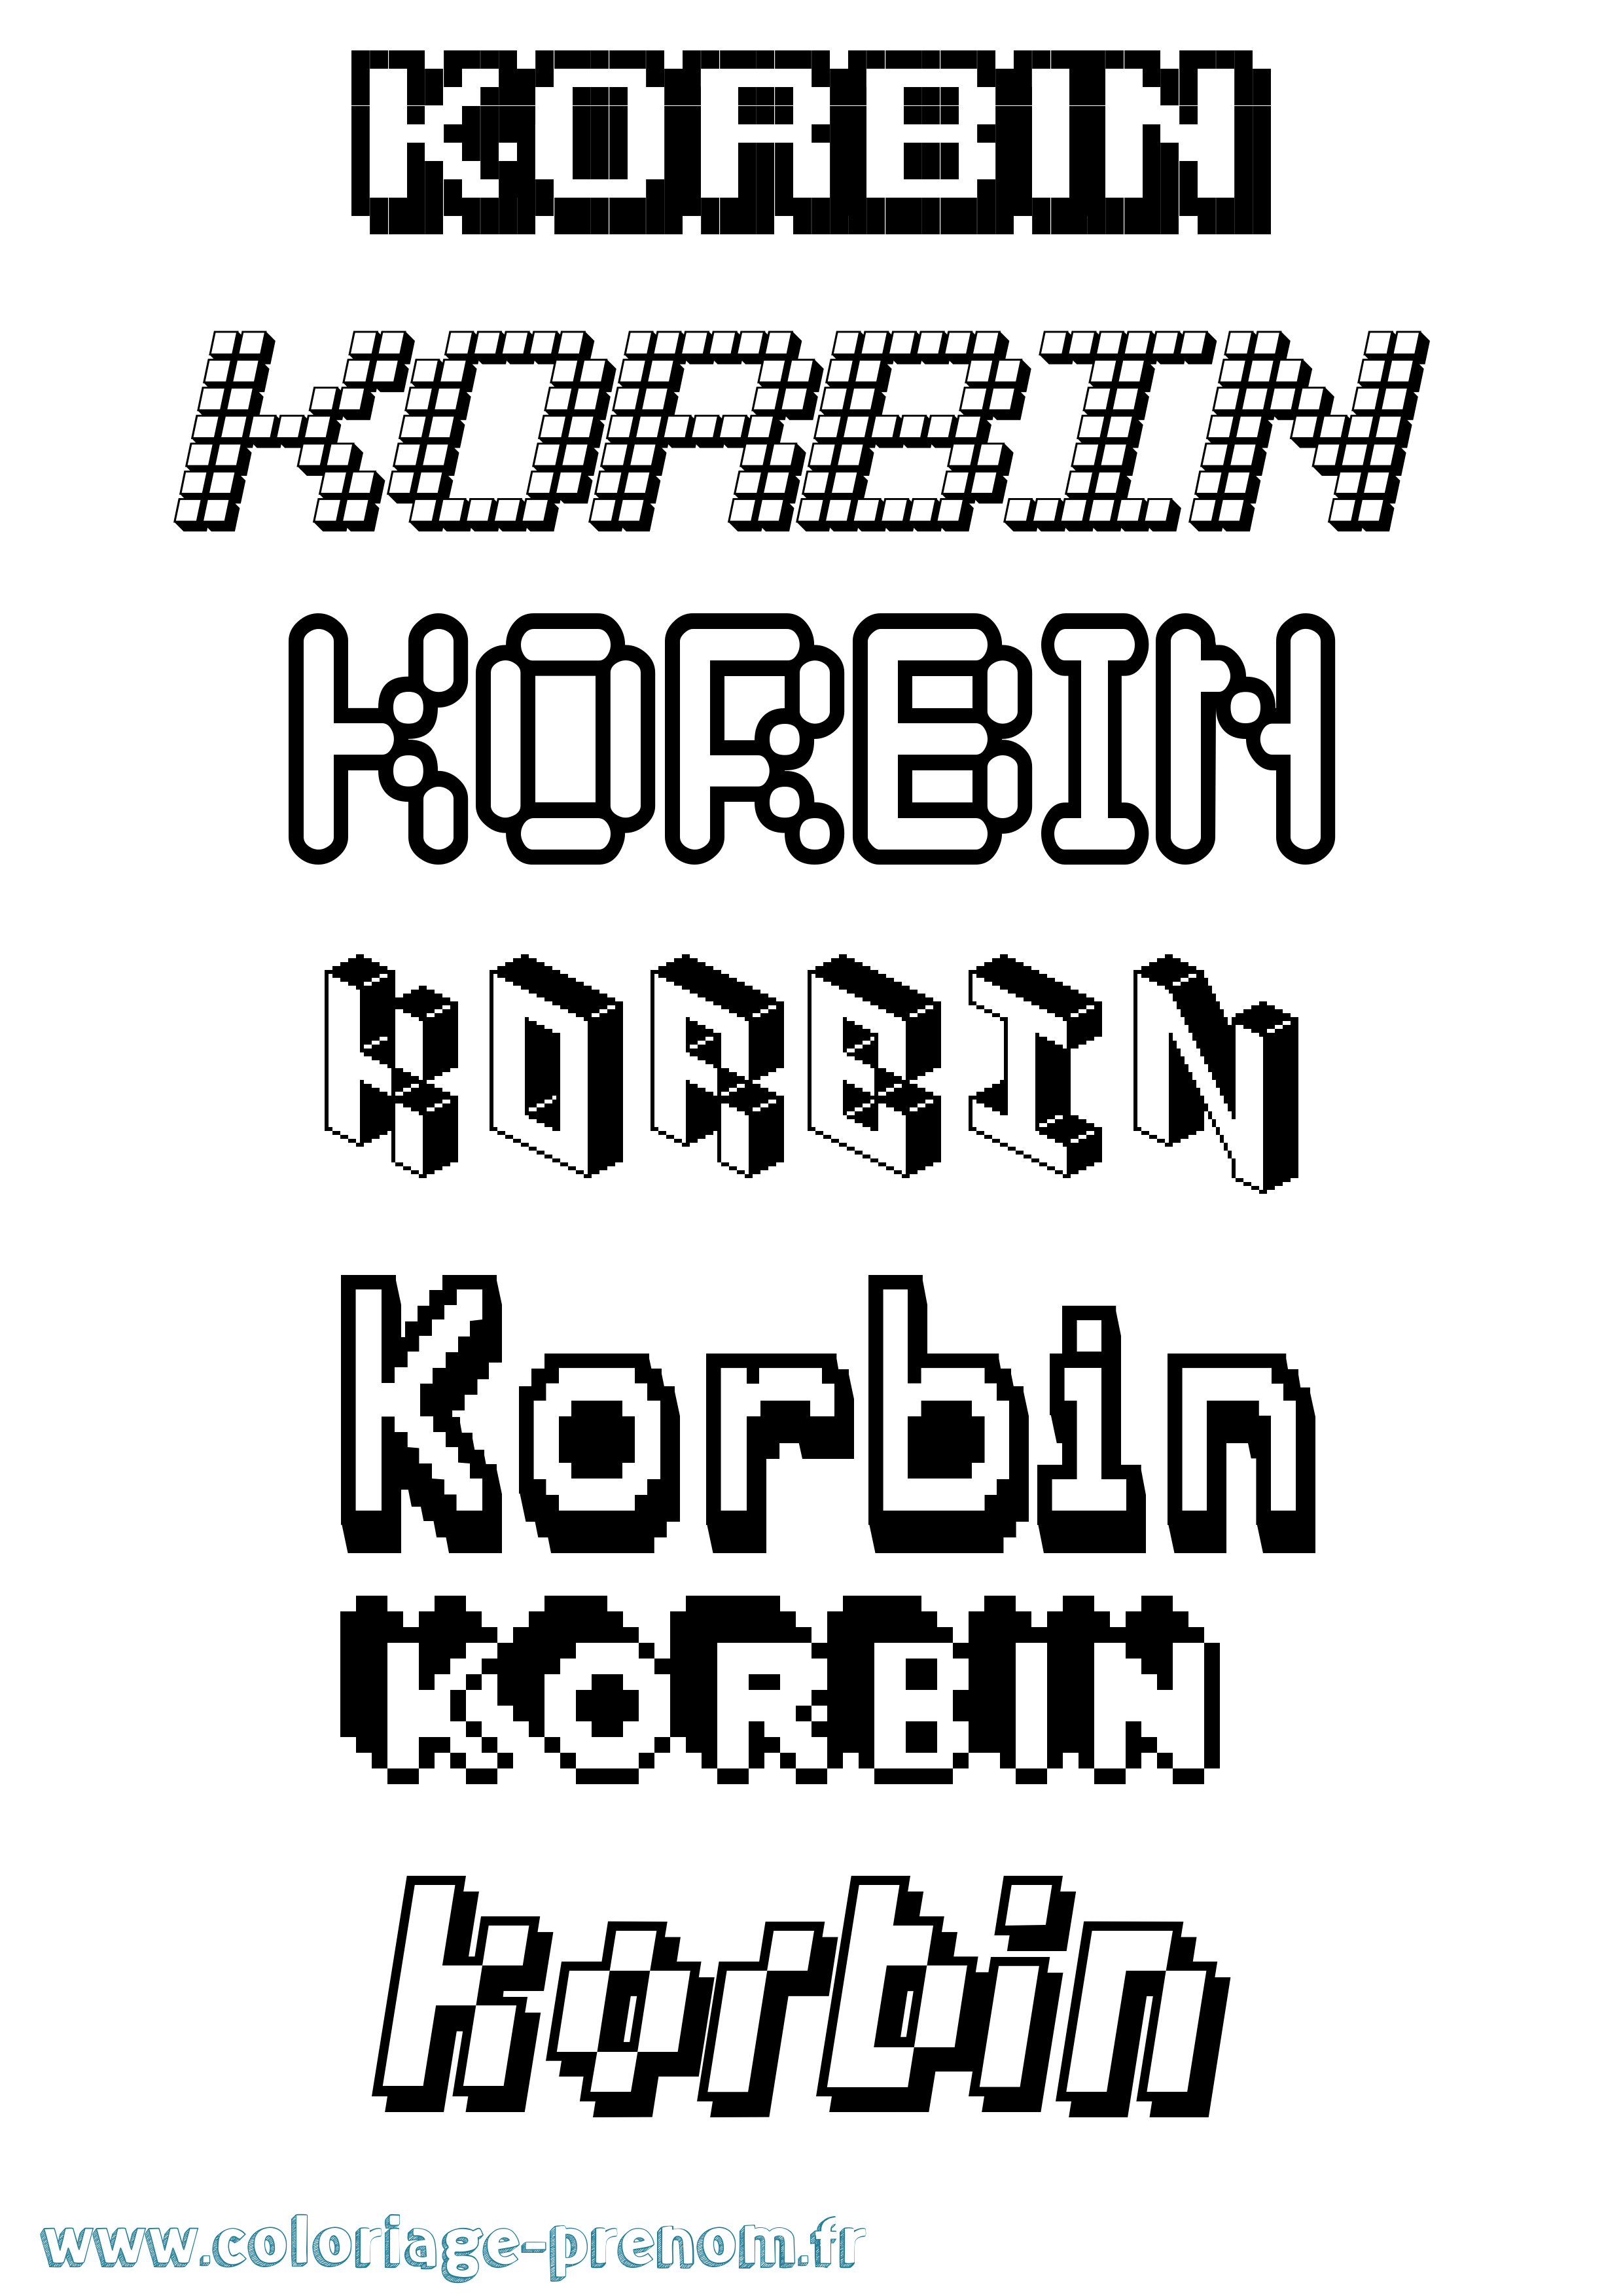 Coloriage prénom Korbin Pixel